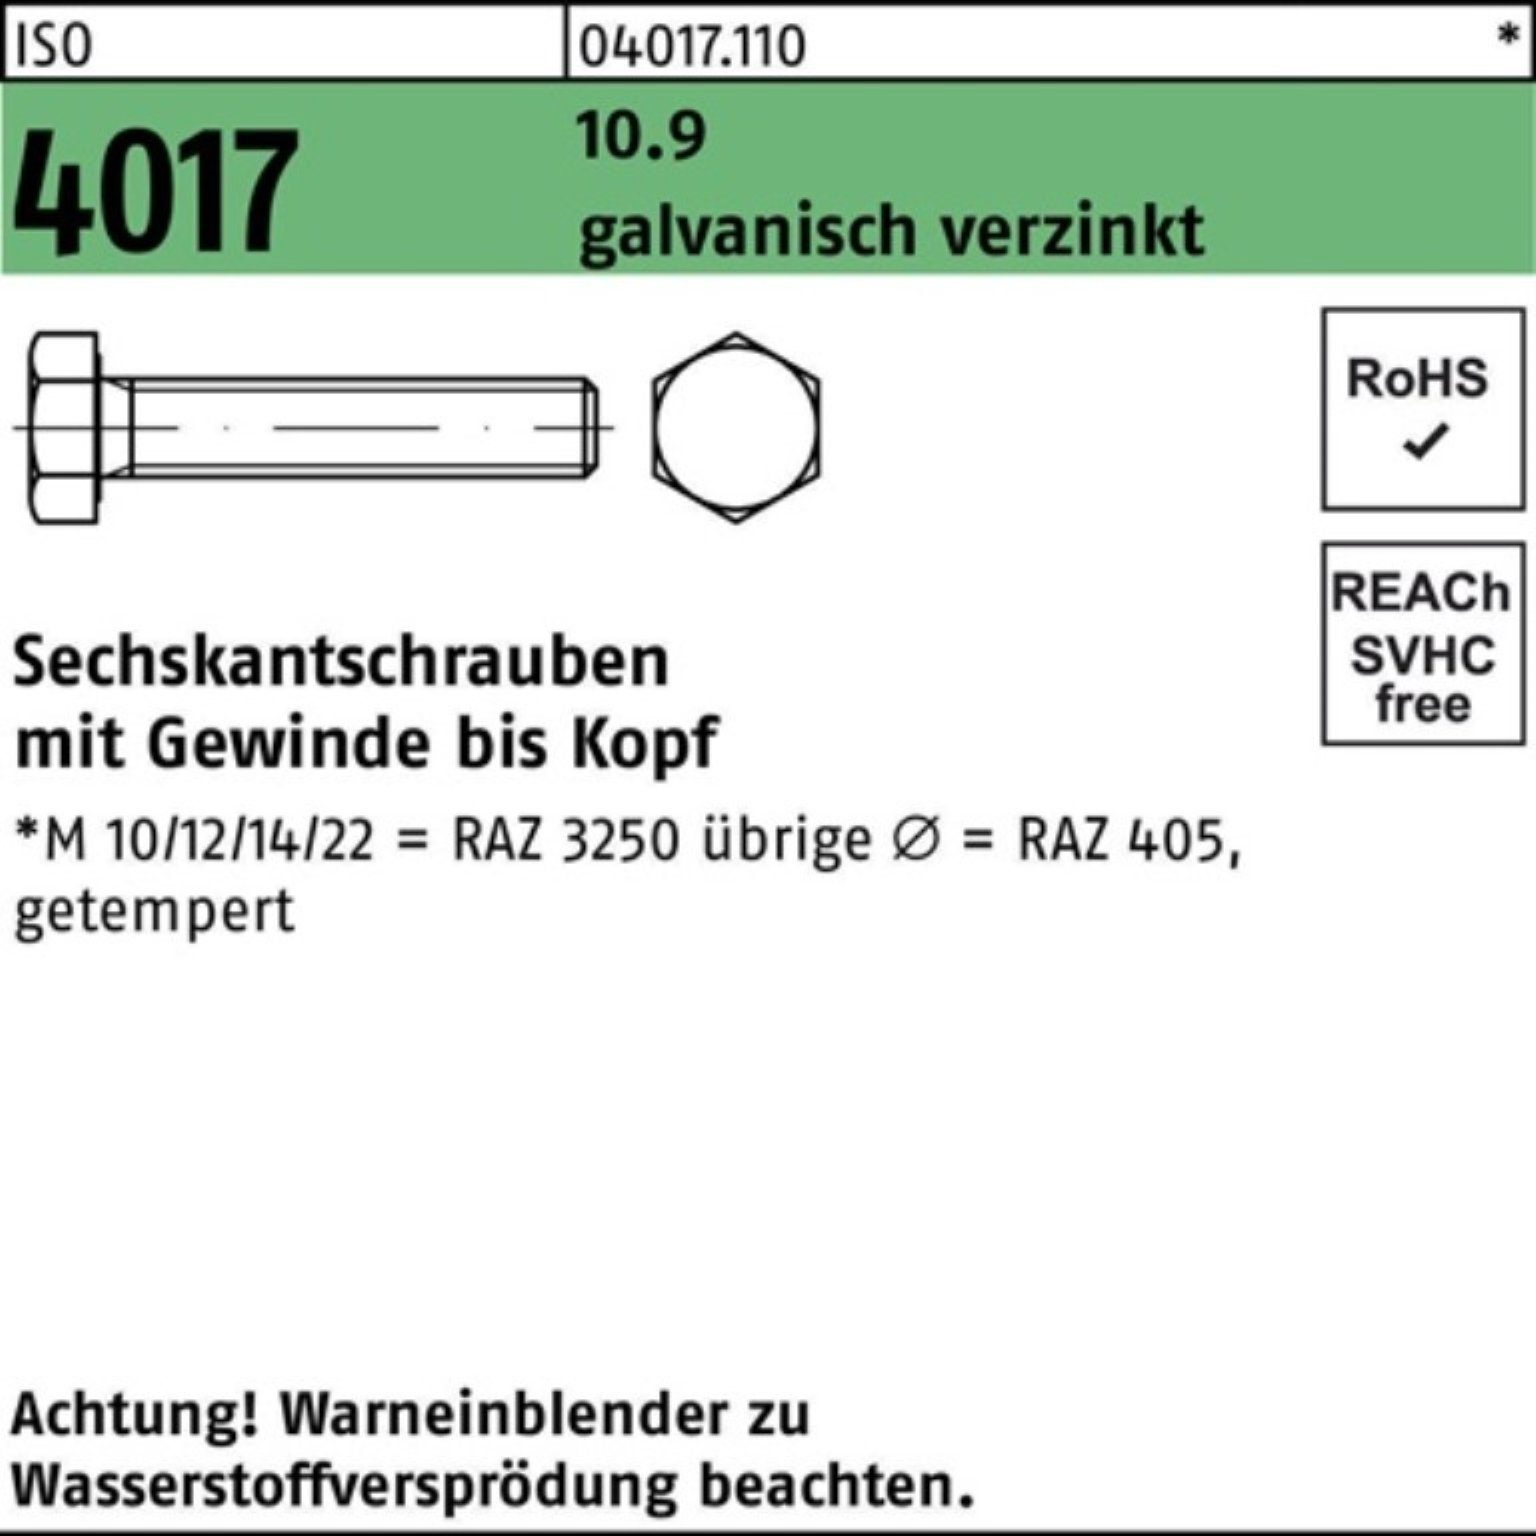 Sechskantschraube Bufab M8x 200 60 ISO St 200er 4017 VG 10.9 Pack galv.verz. Sechskantschraube